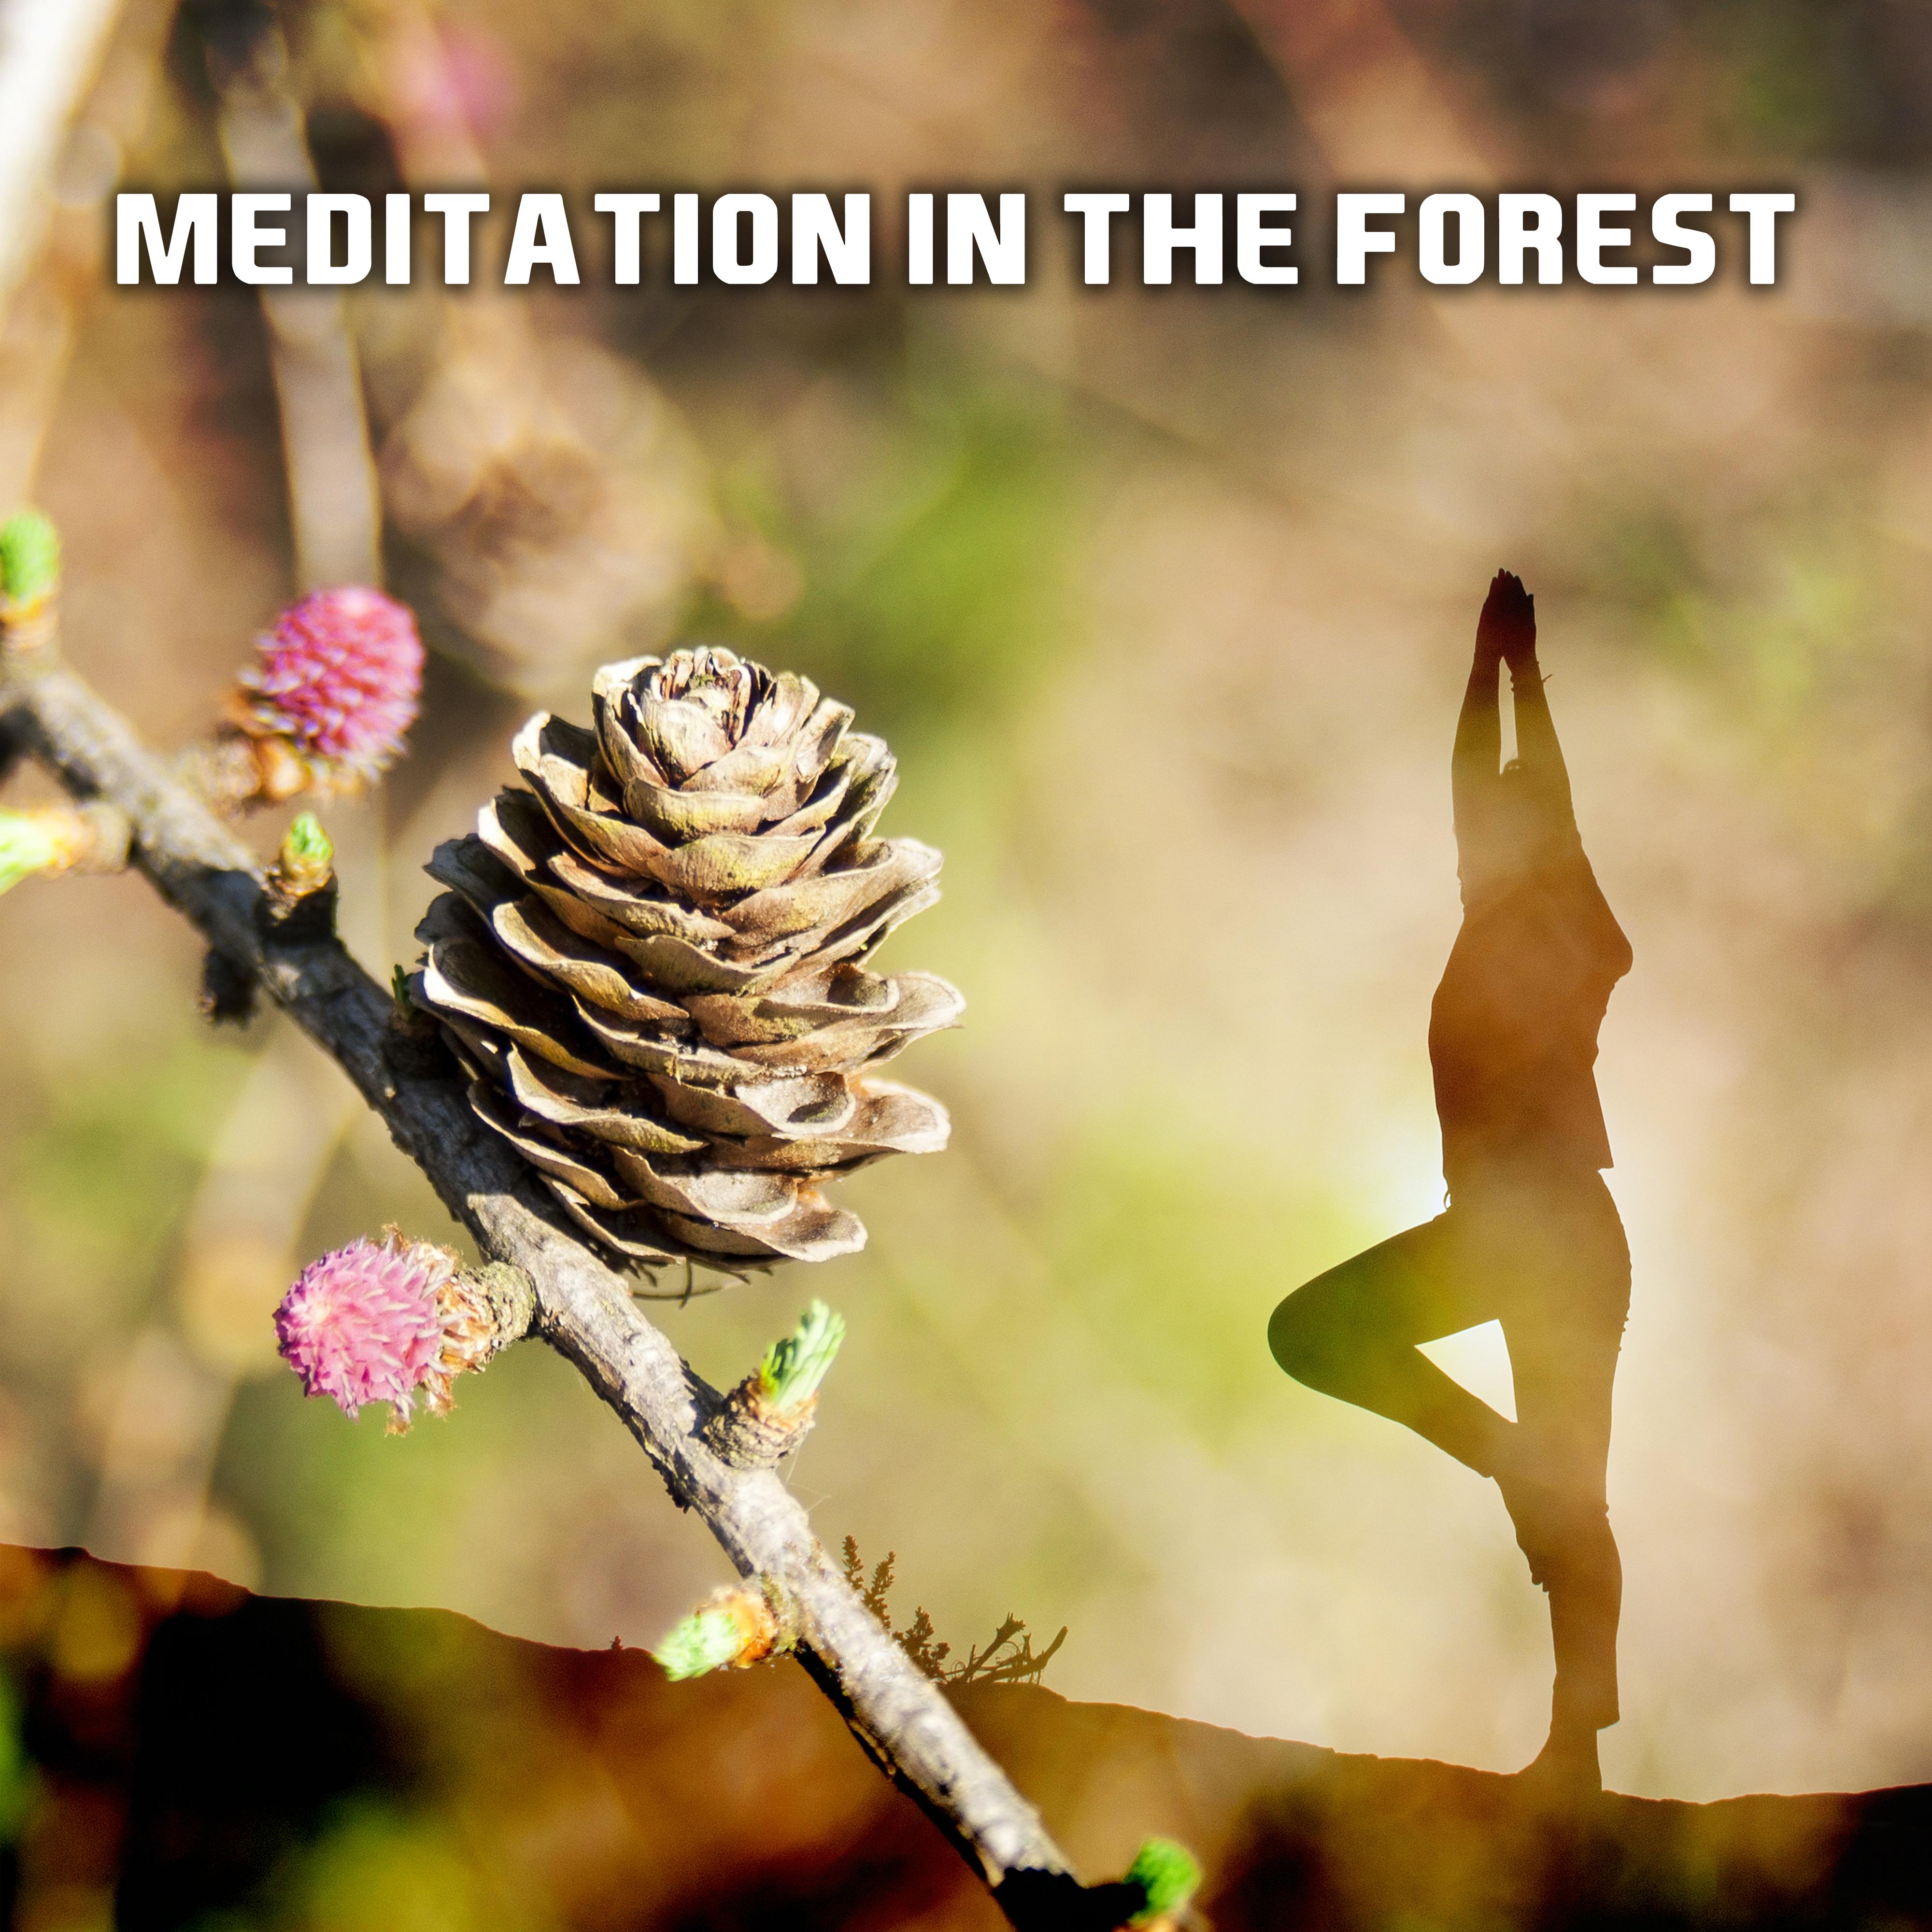 Meditation in the Forest – Relaxing Music, Be Close The Nature, Feel Inner Calmness, Zen, Bliss